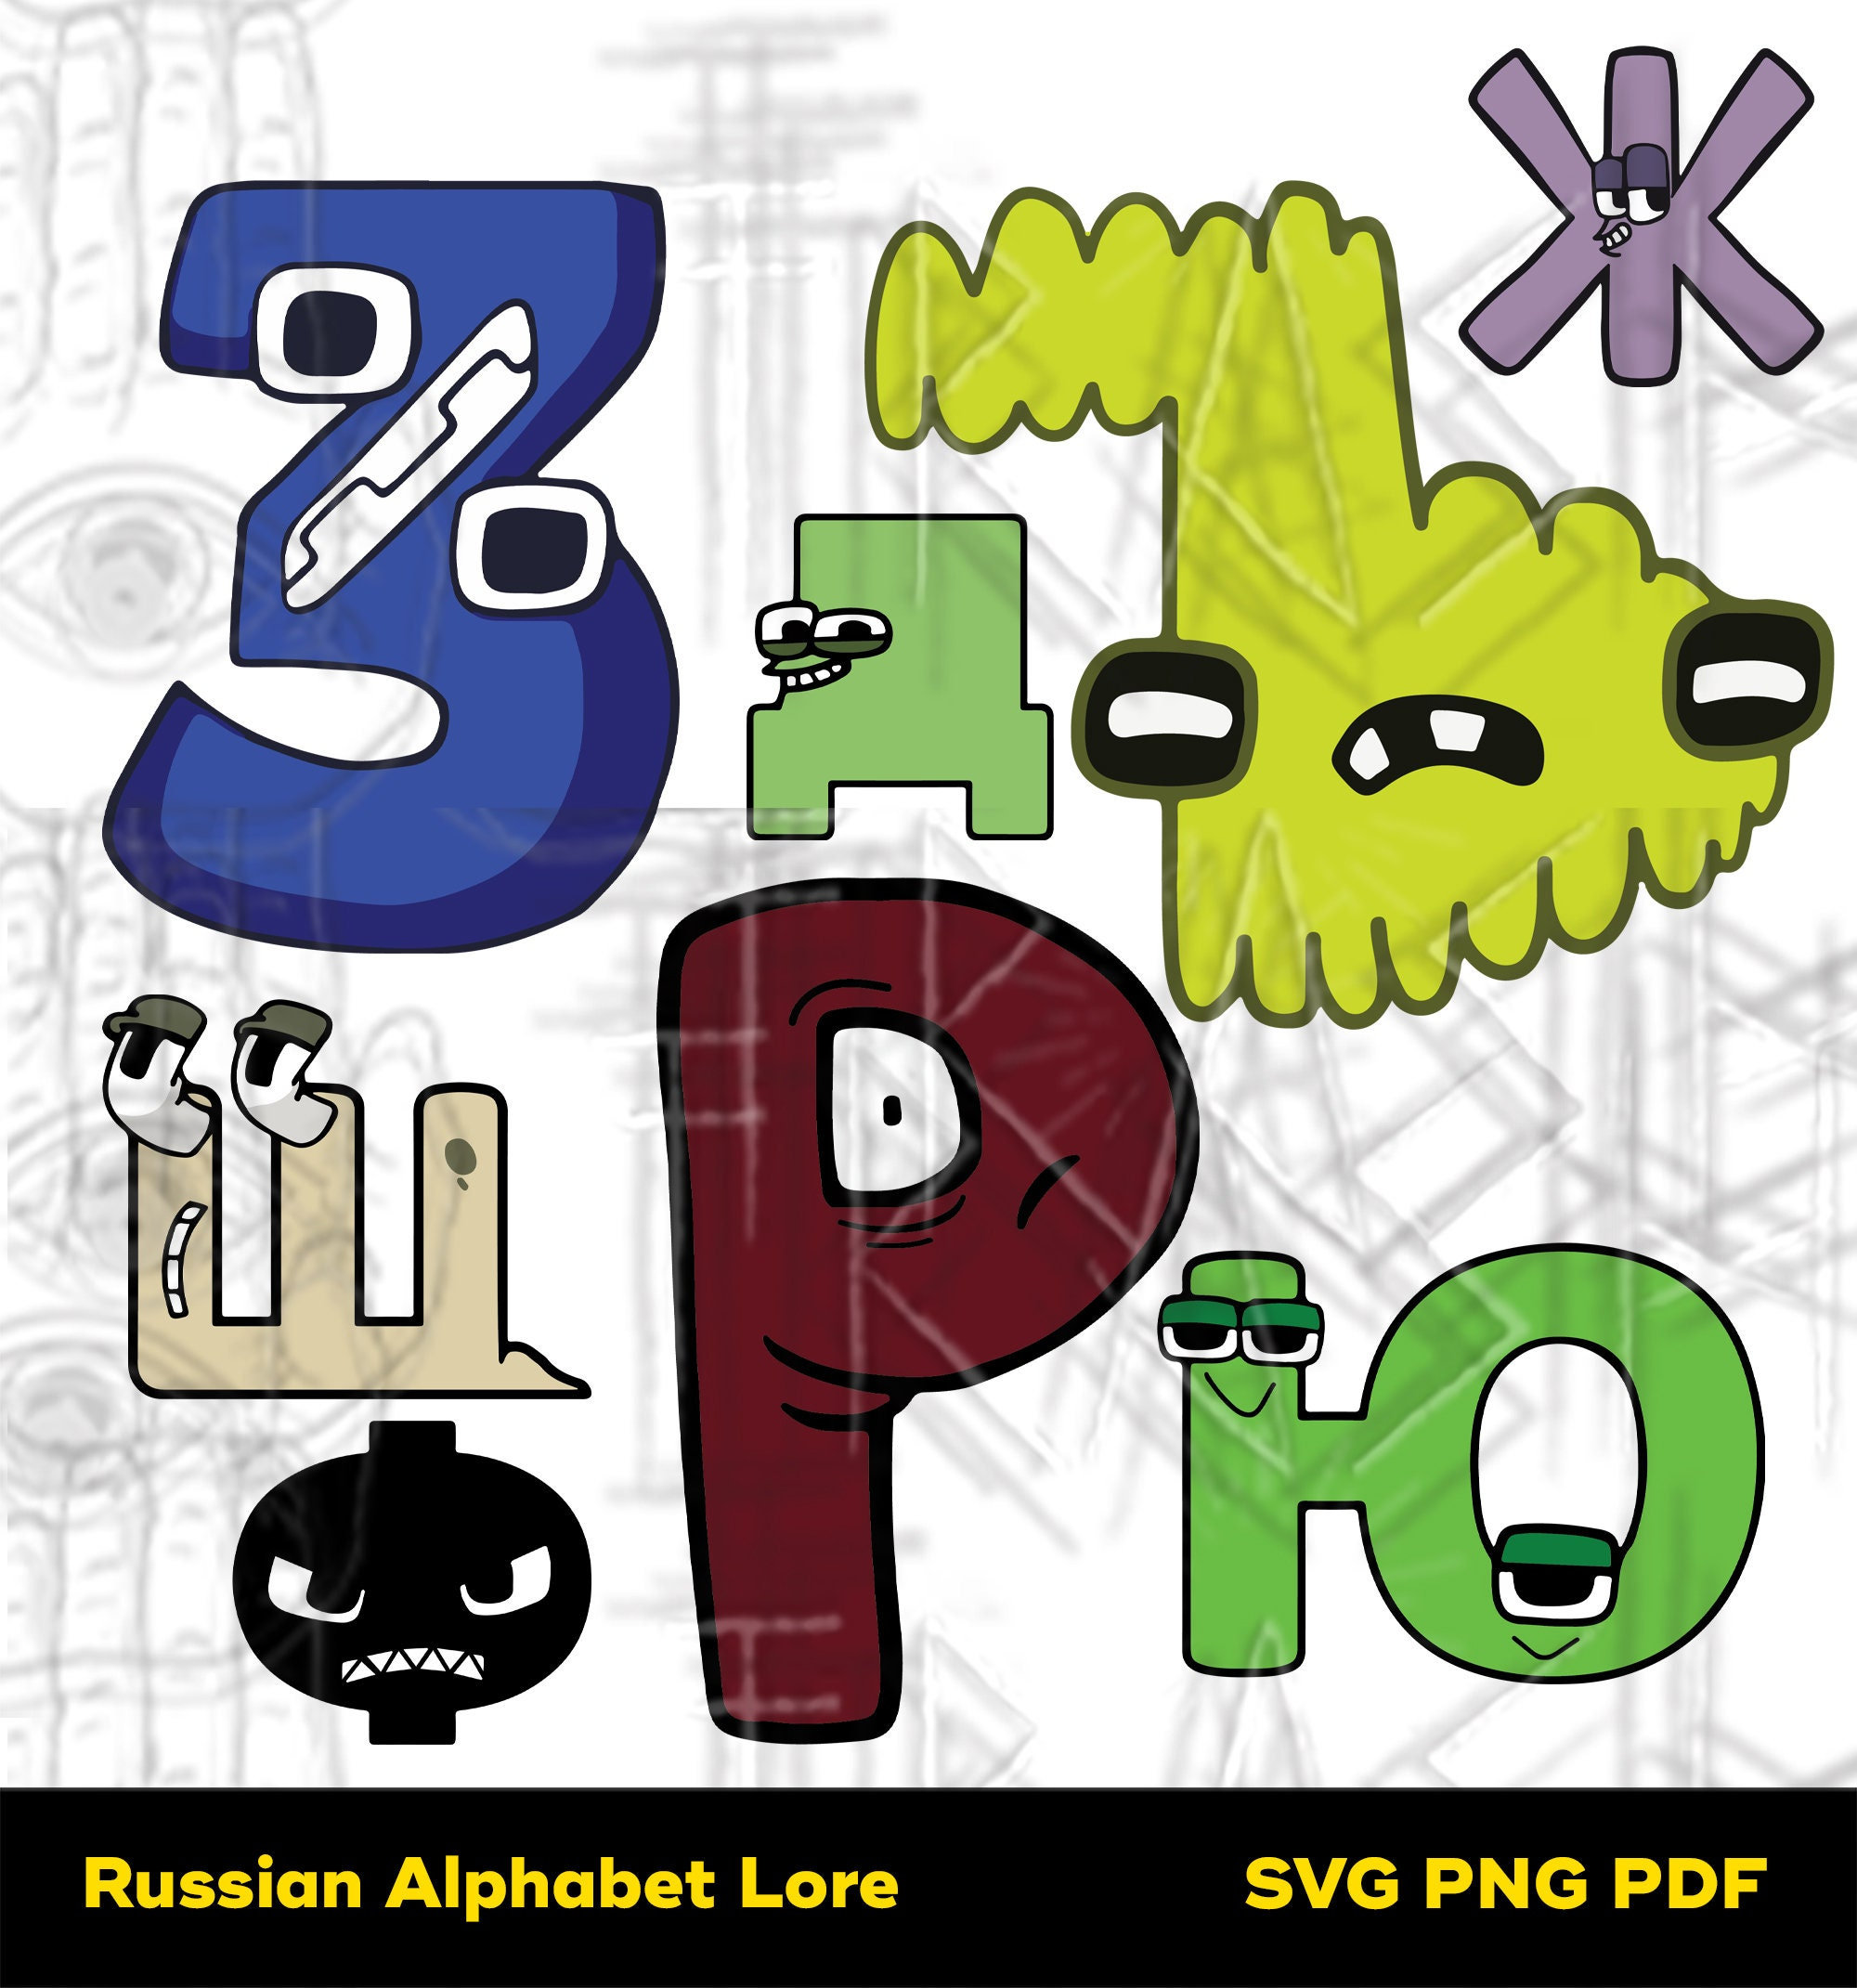 More Russian Alphabet Lore : r/alphabetfriends